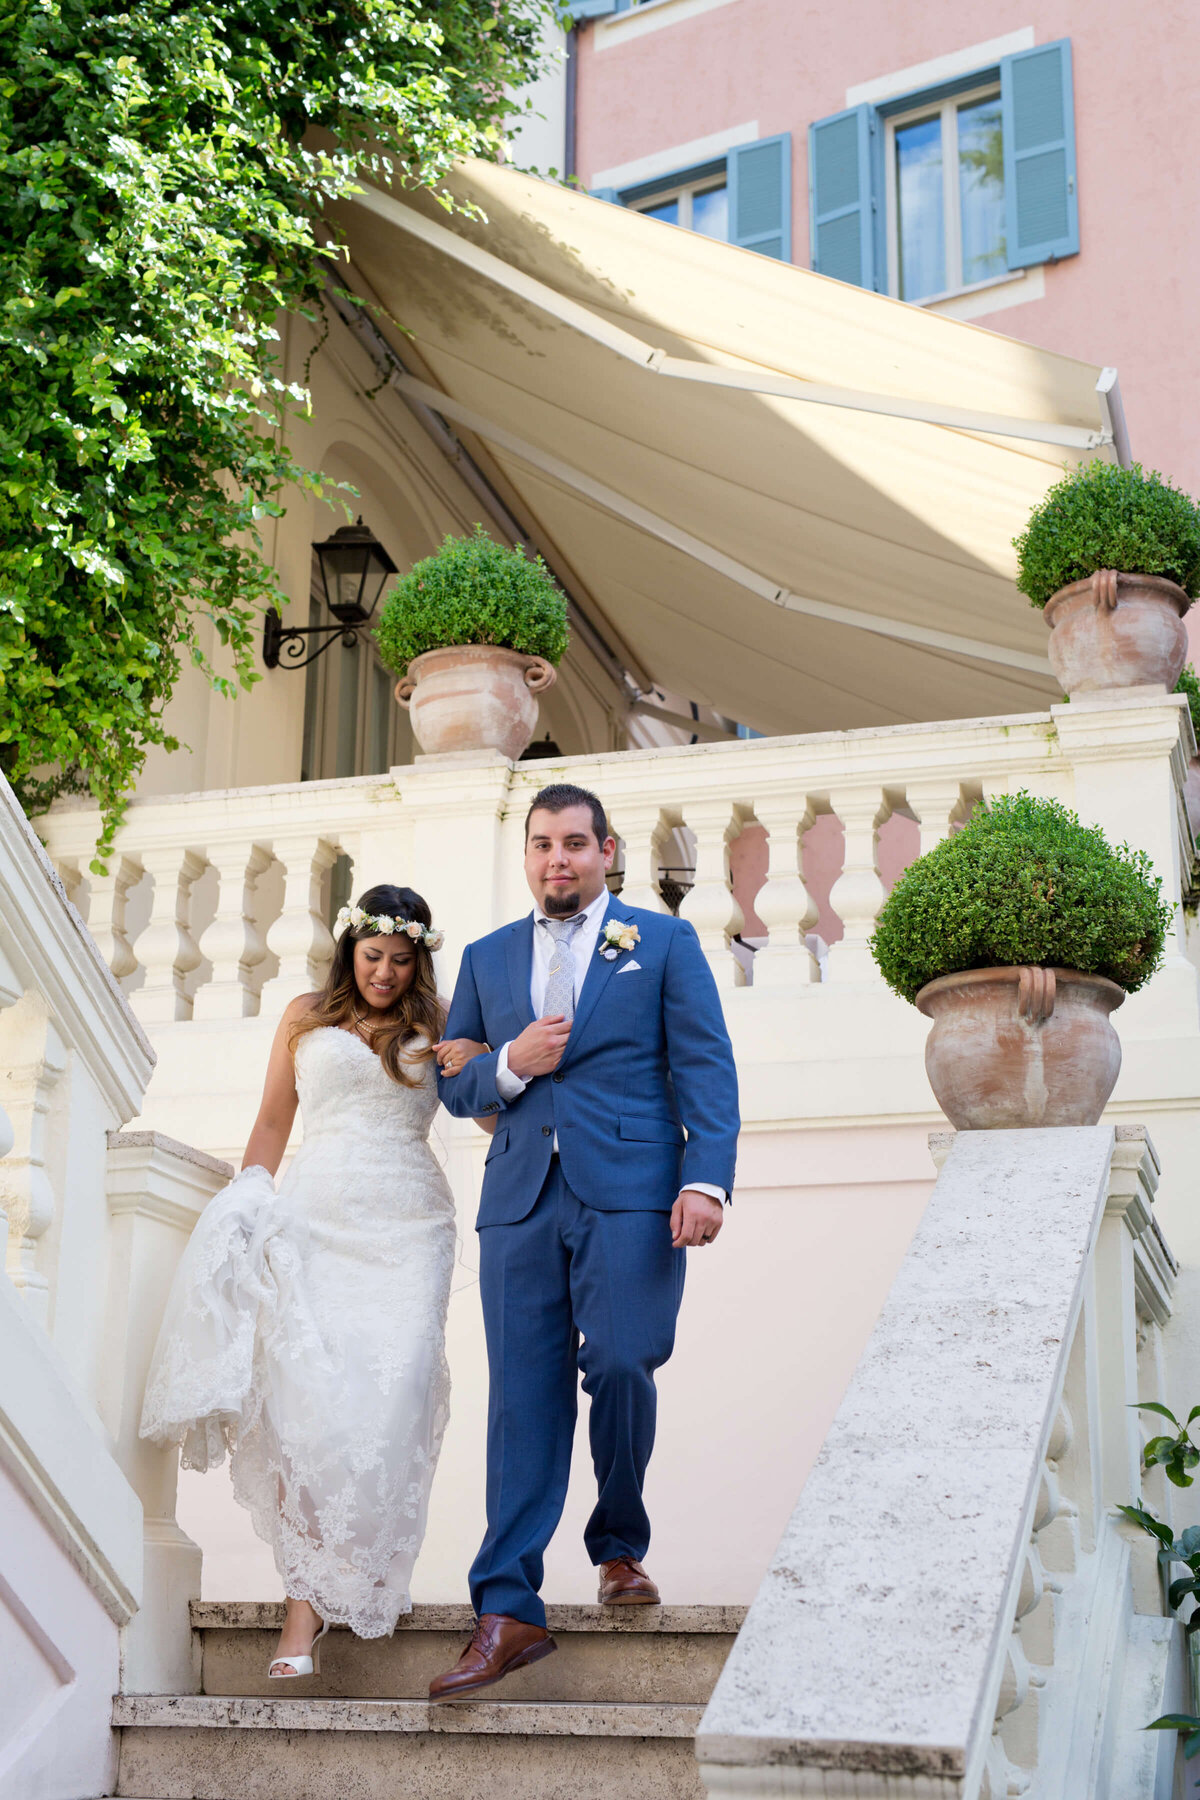 Wedding L&J - Rome - Italy 2016 07